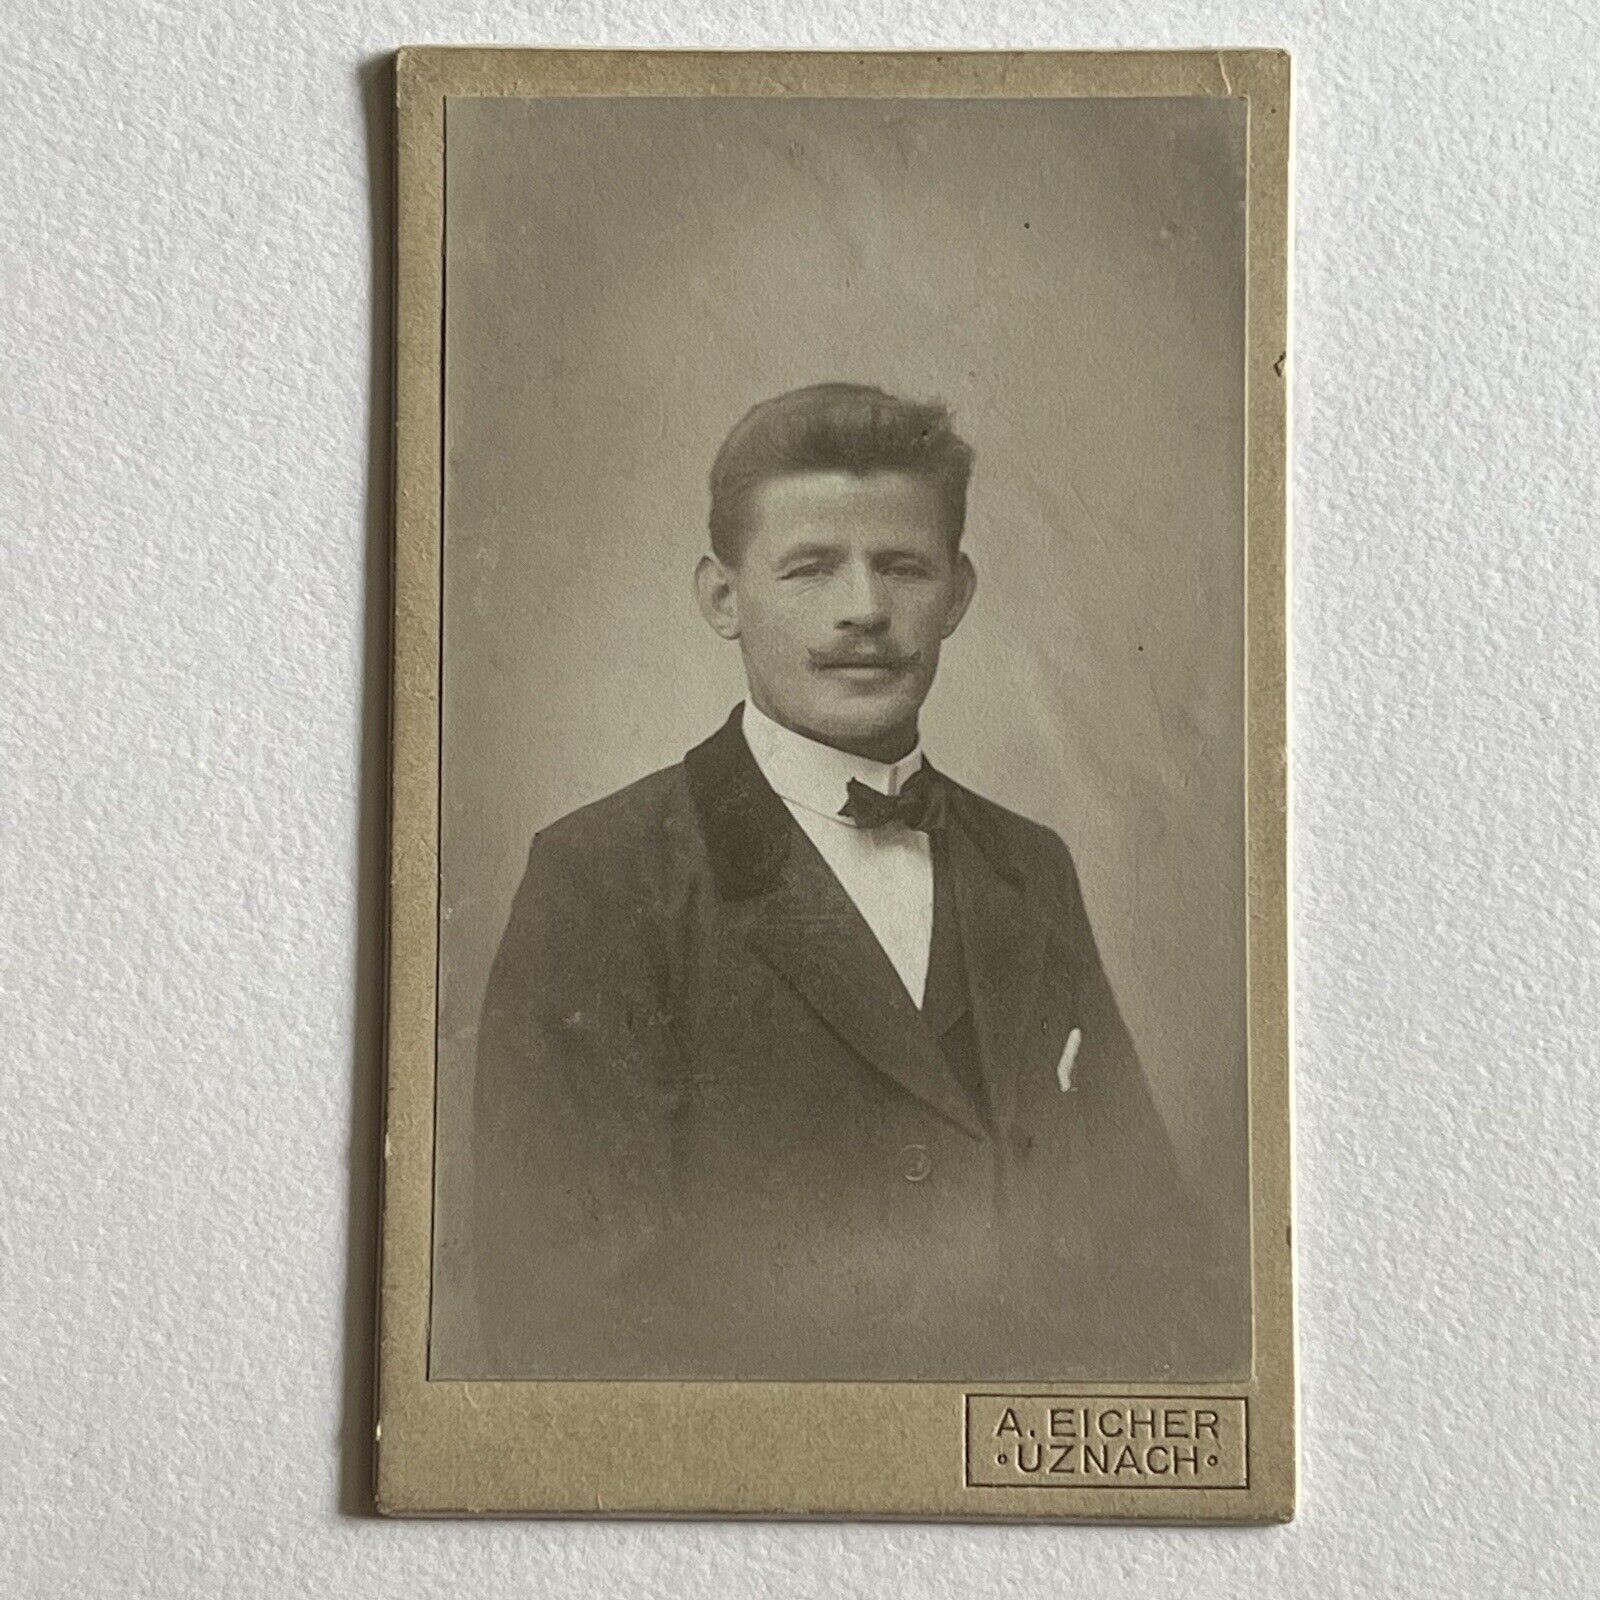 Antique CDV Photograph Charming Mature Man Mustache Uznach Switzerland